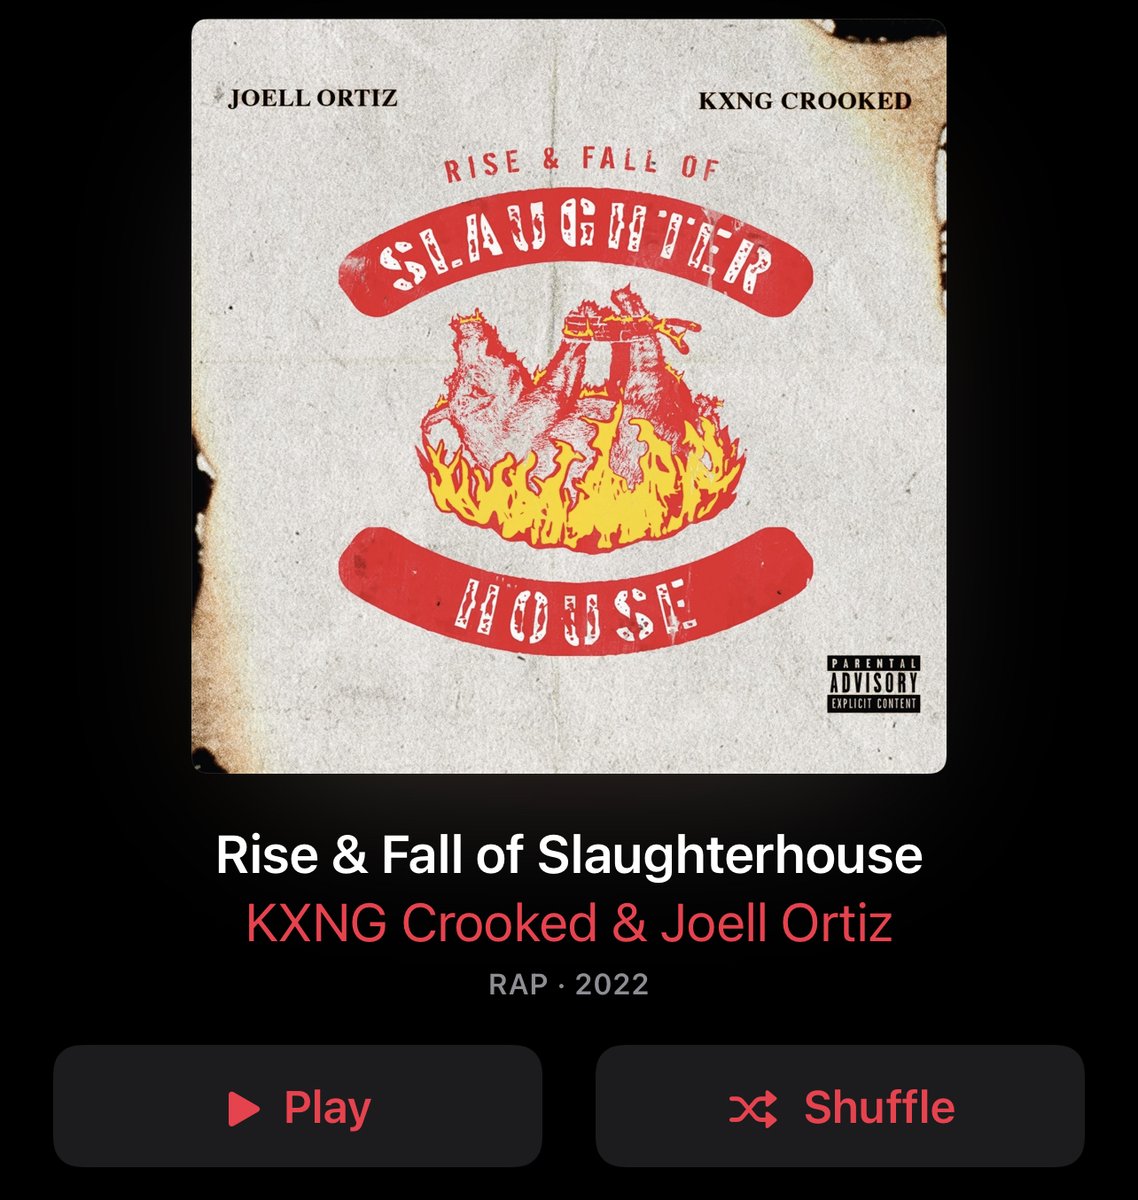 The Explicit Version Is Now Ready, Let’s Go! @JoellOrtiz x @CrookedIntriago #RiseAndFallOfSlaughterhouse